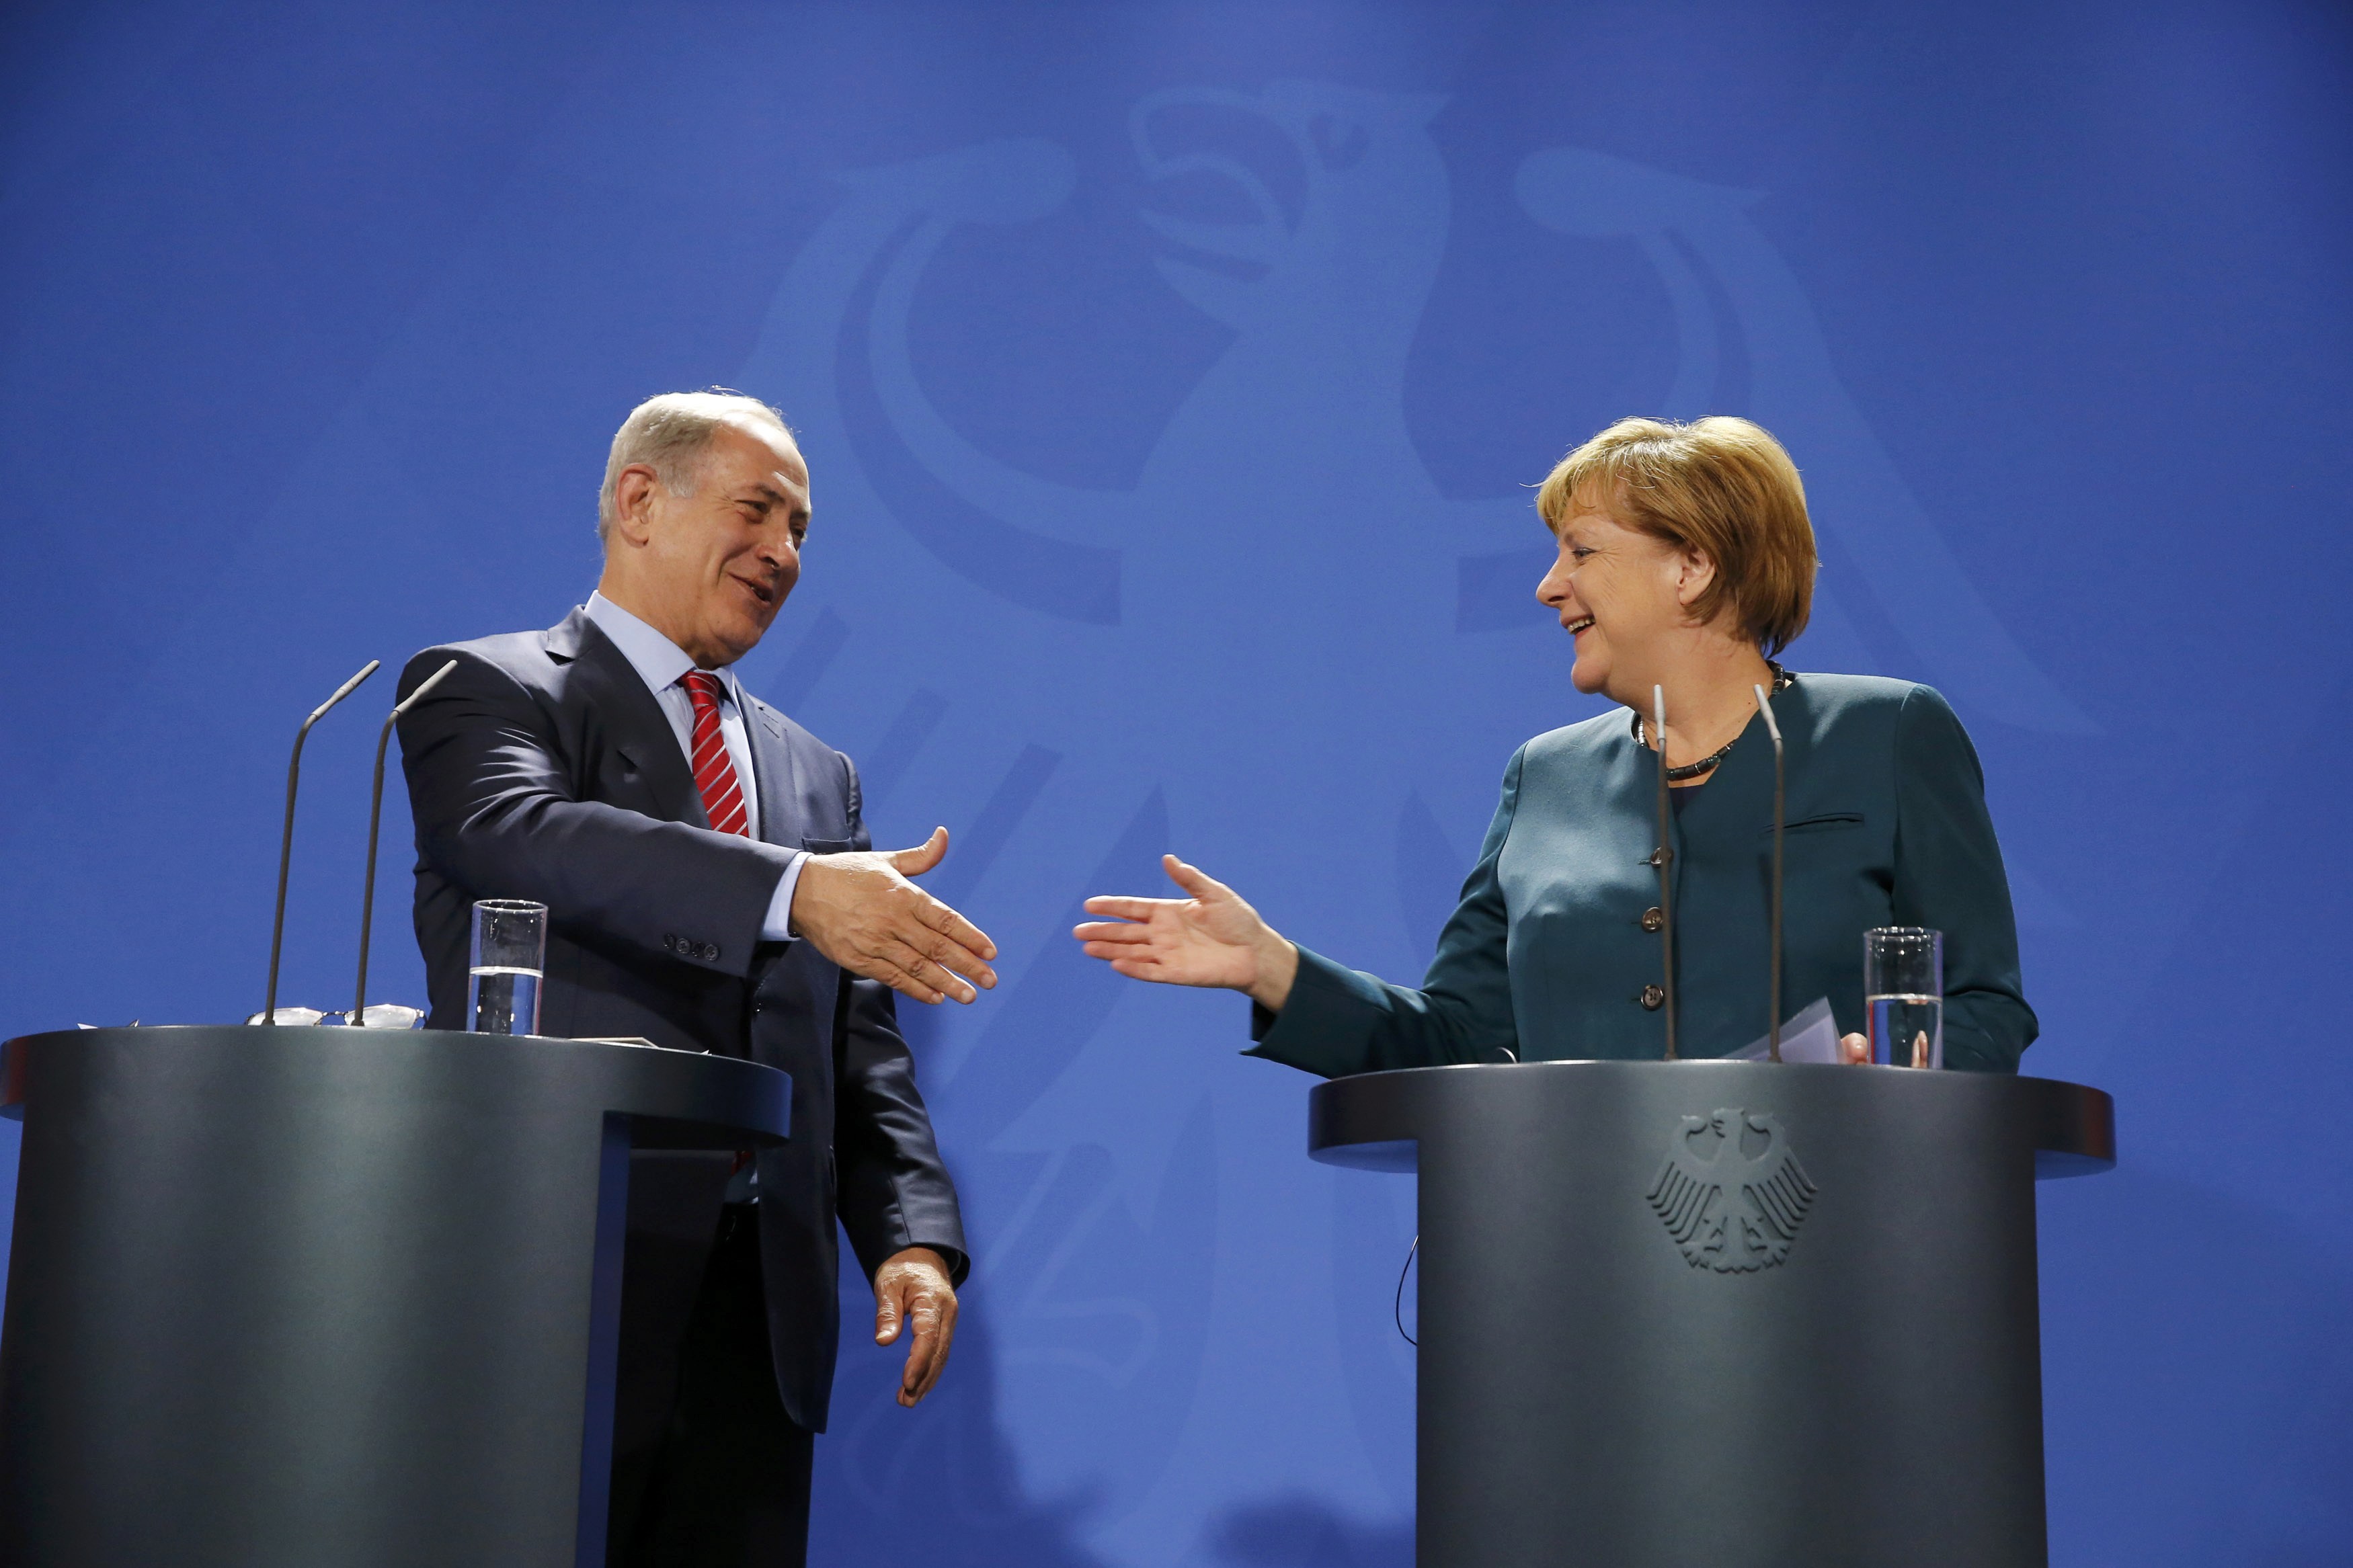 Kanselir Jerman Angela Merkel memberi selamat kepada Perdana Menteri Israel Benyamin Netanyahu pada hari ulang tahunnya saat konferesi bersama di Kantor Kanselir di Berlin, Jerman, Rabu (21/10). ANTARA FOTO/REUTERS/Fabrizio Bensch.